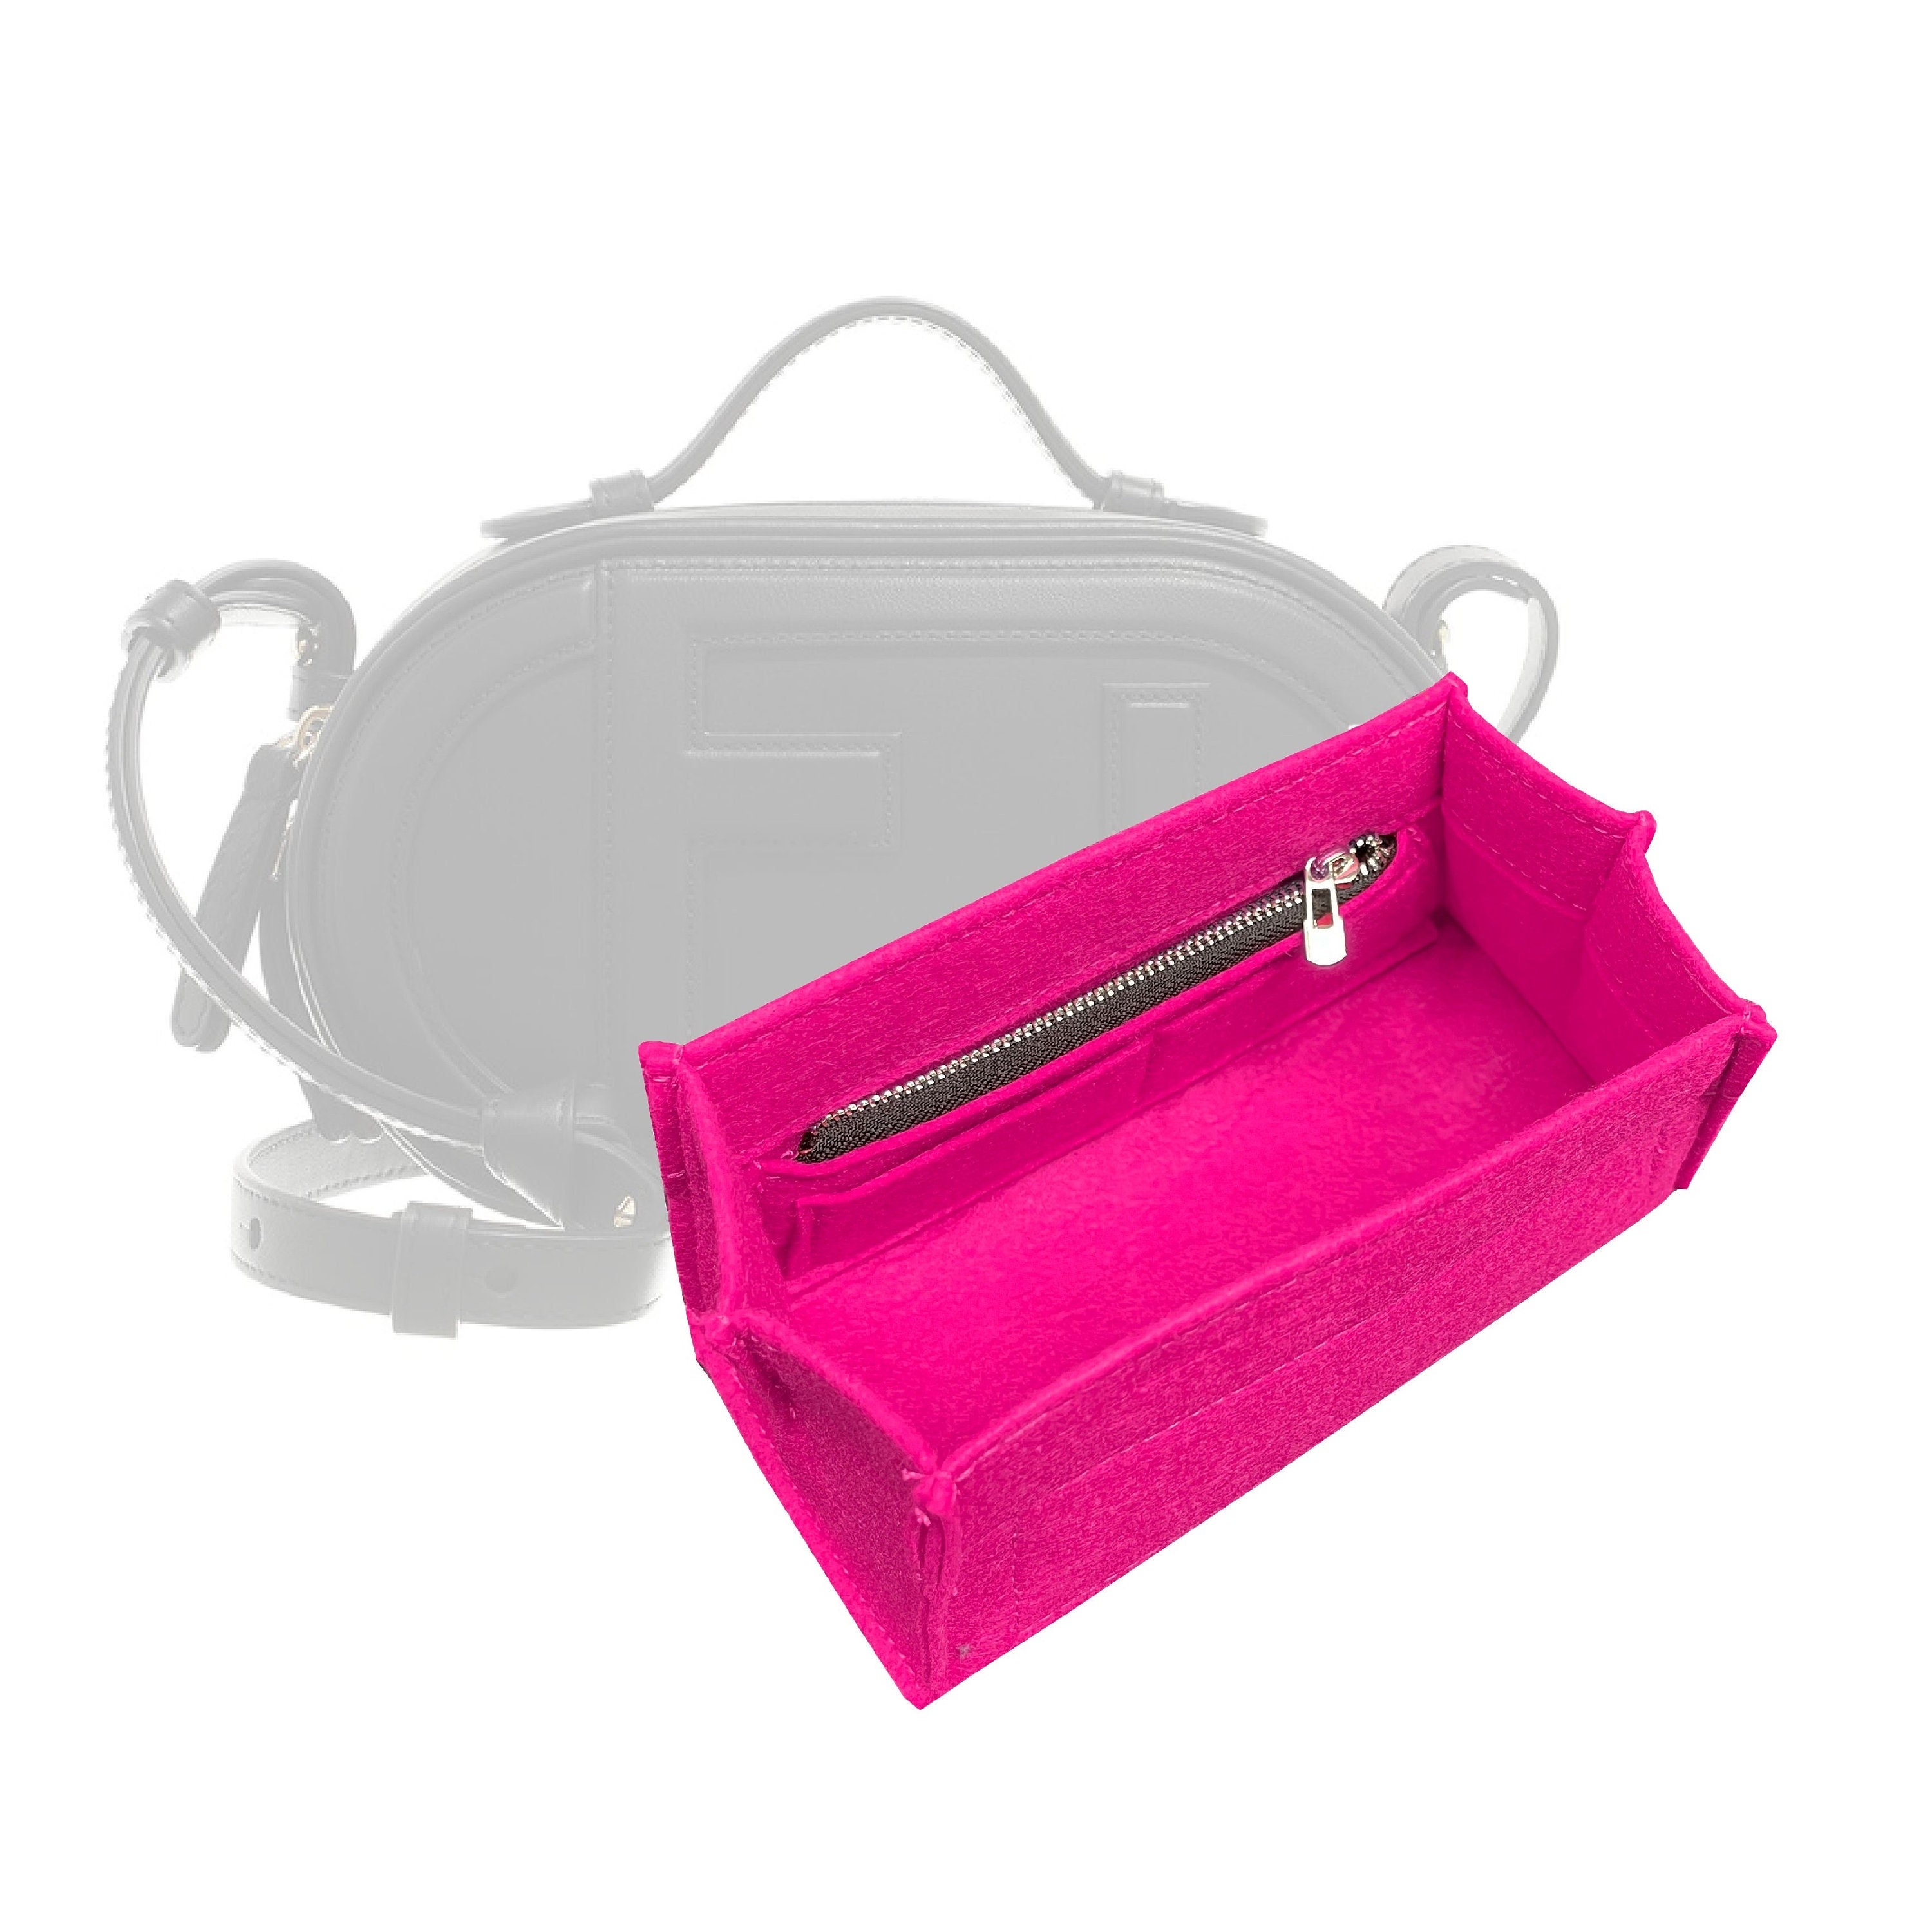 O'Lock Mini Camera Case - Pale pink leather mini bag